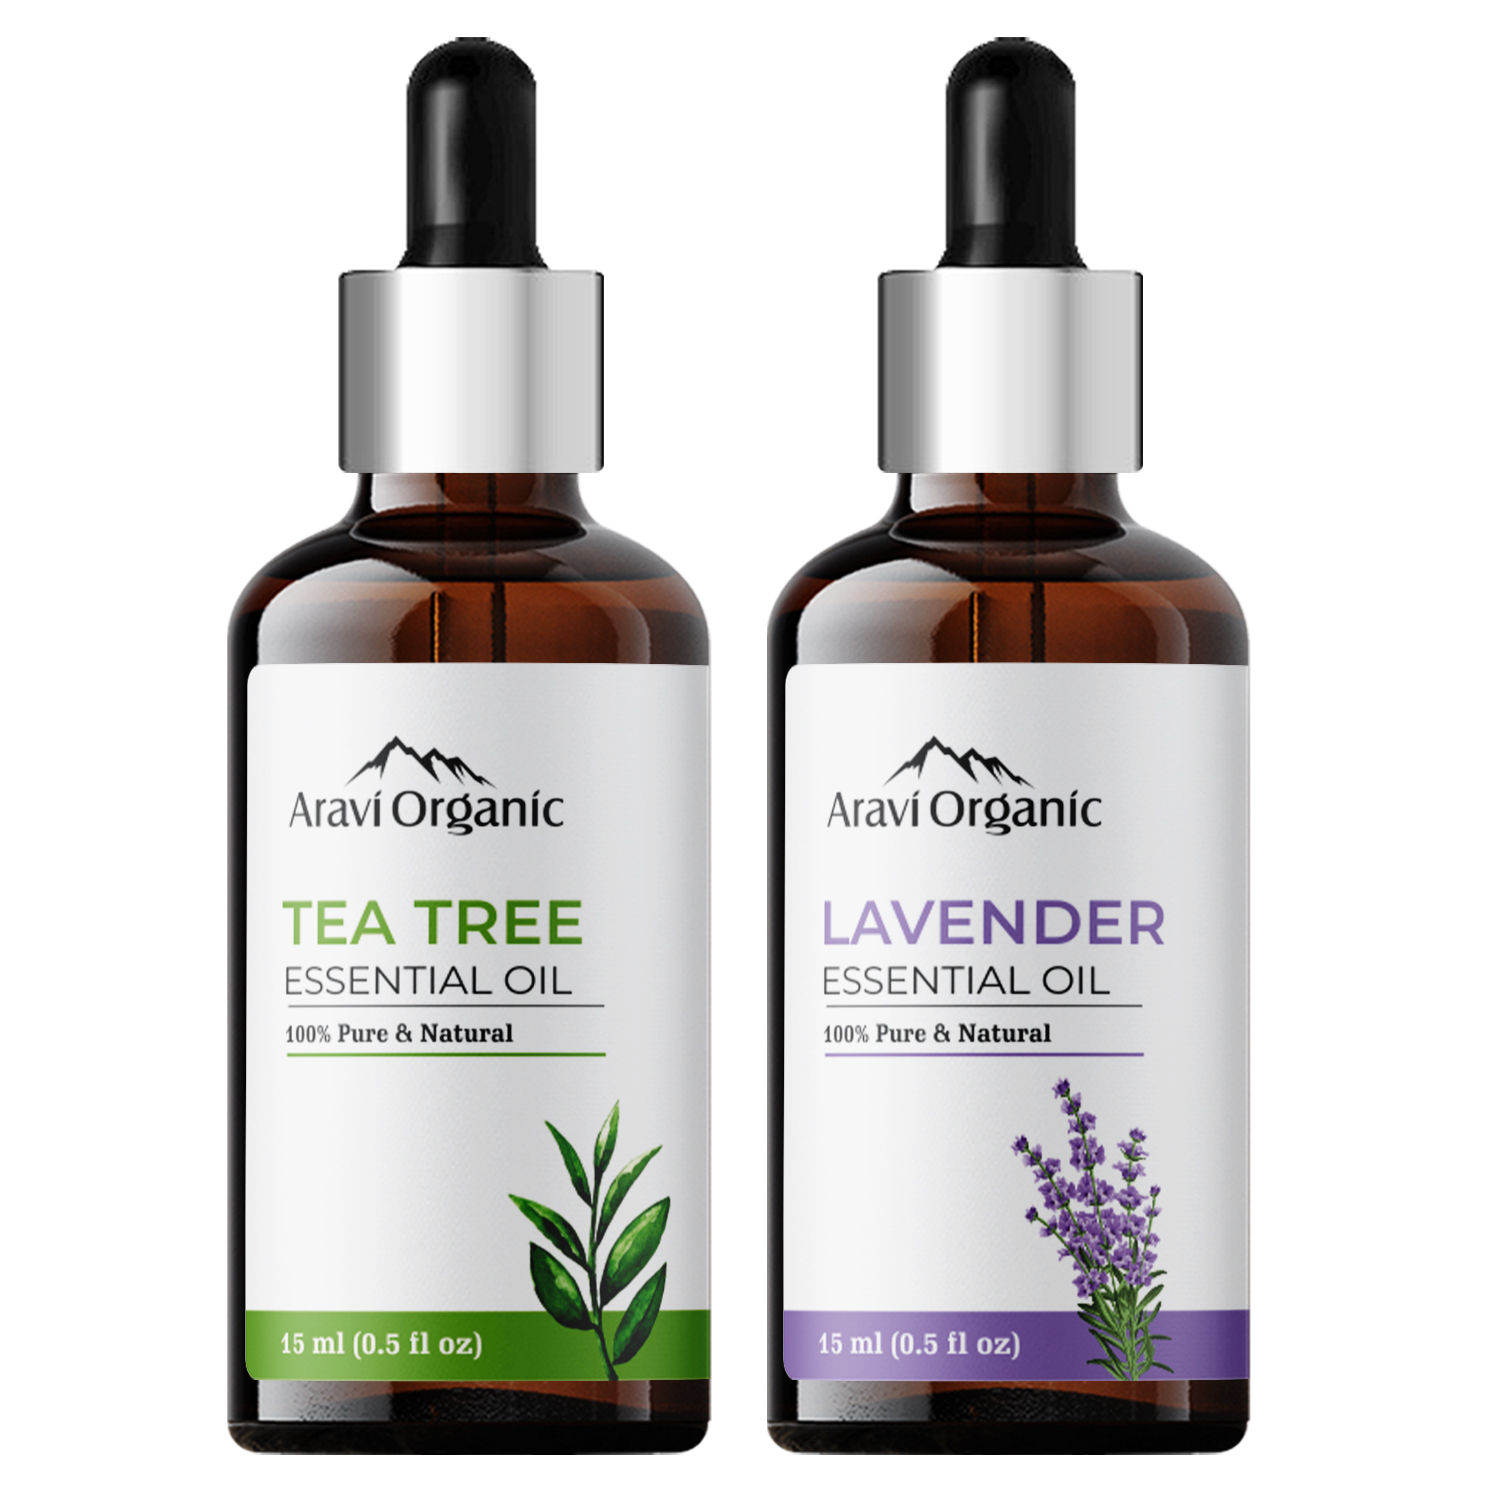 Aravi Organic Tea Tree and Lavender Essential Oil Combo Pack